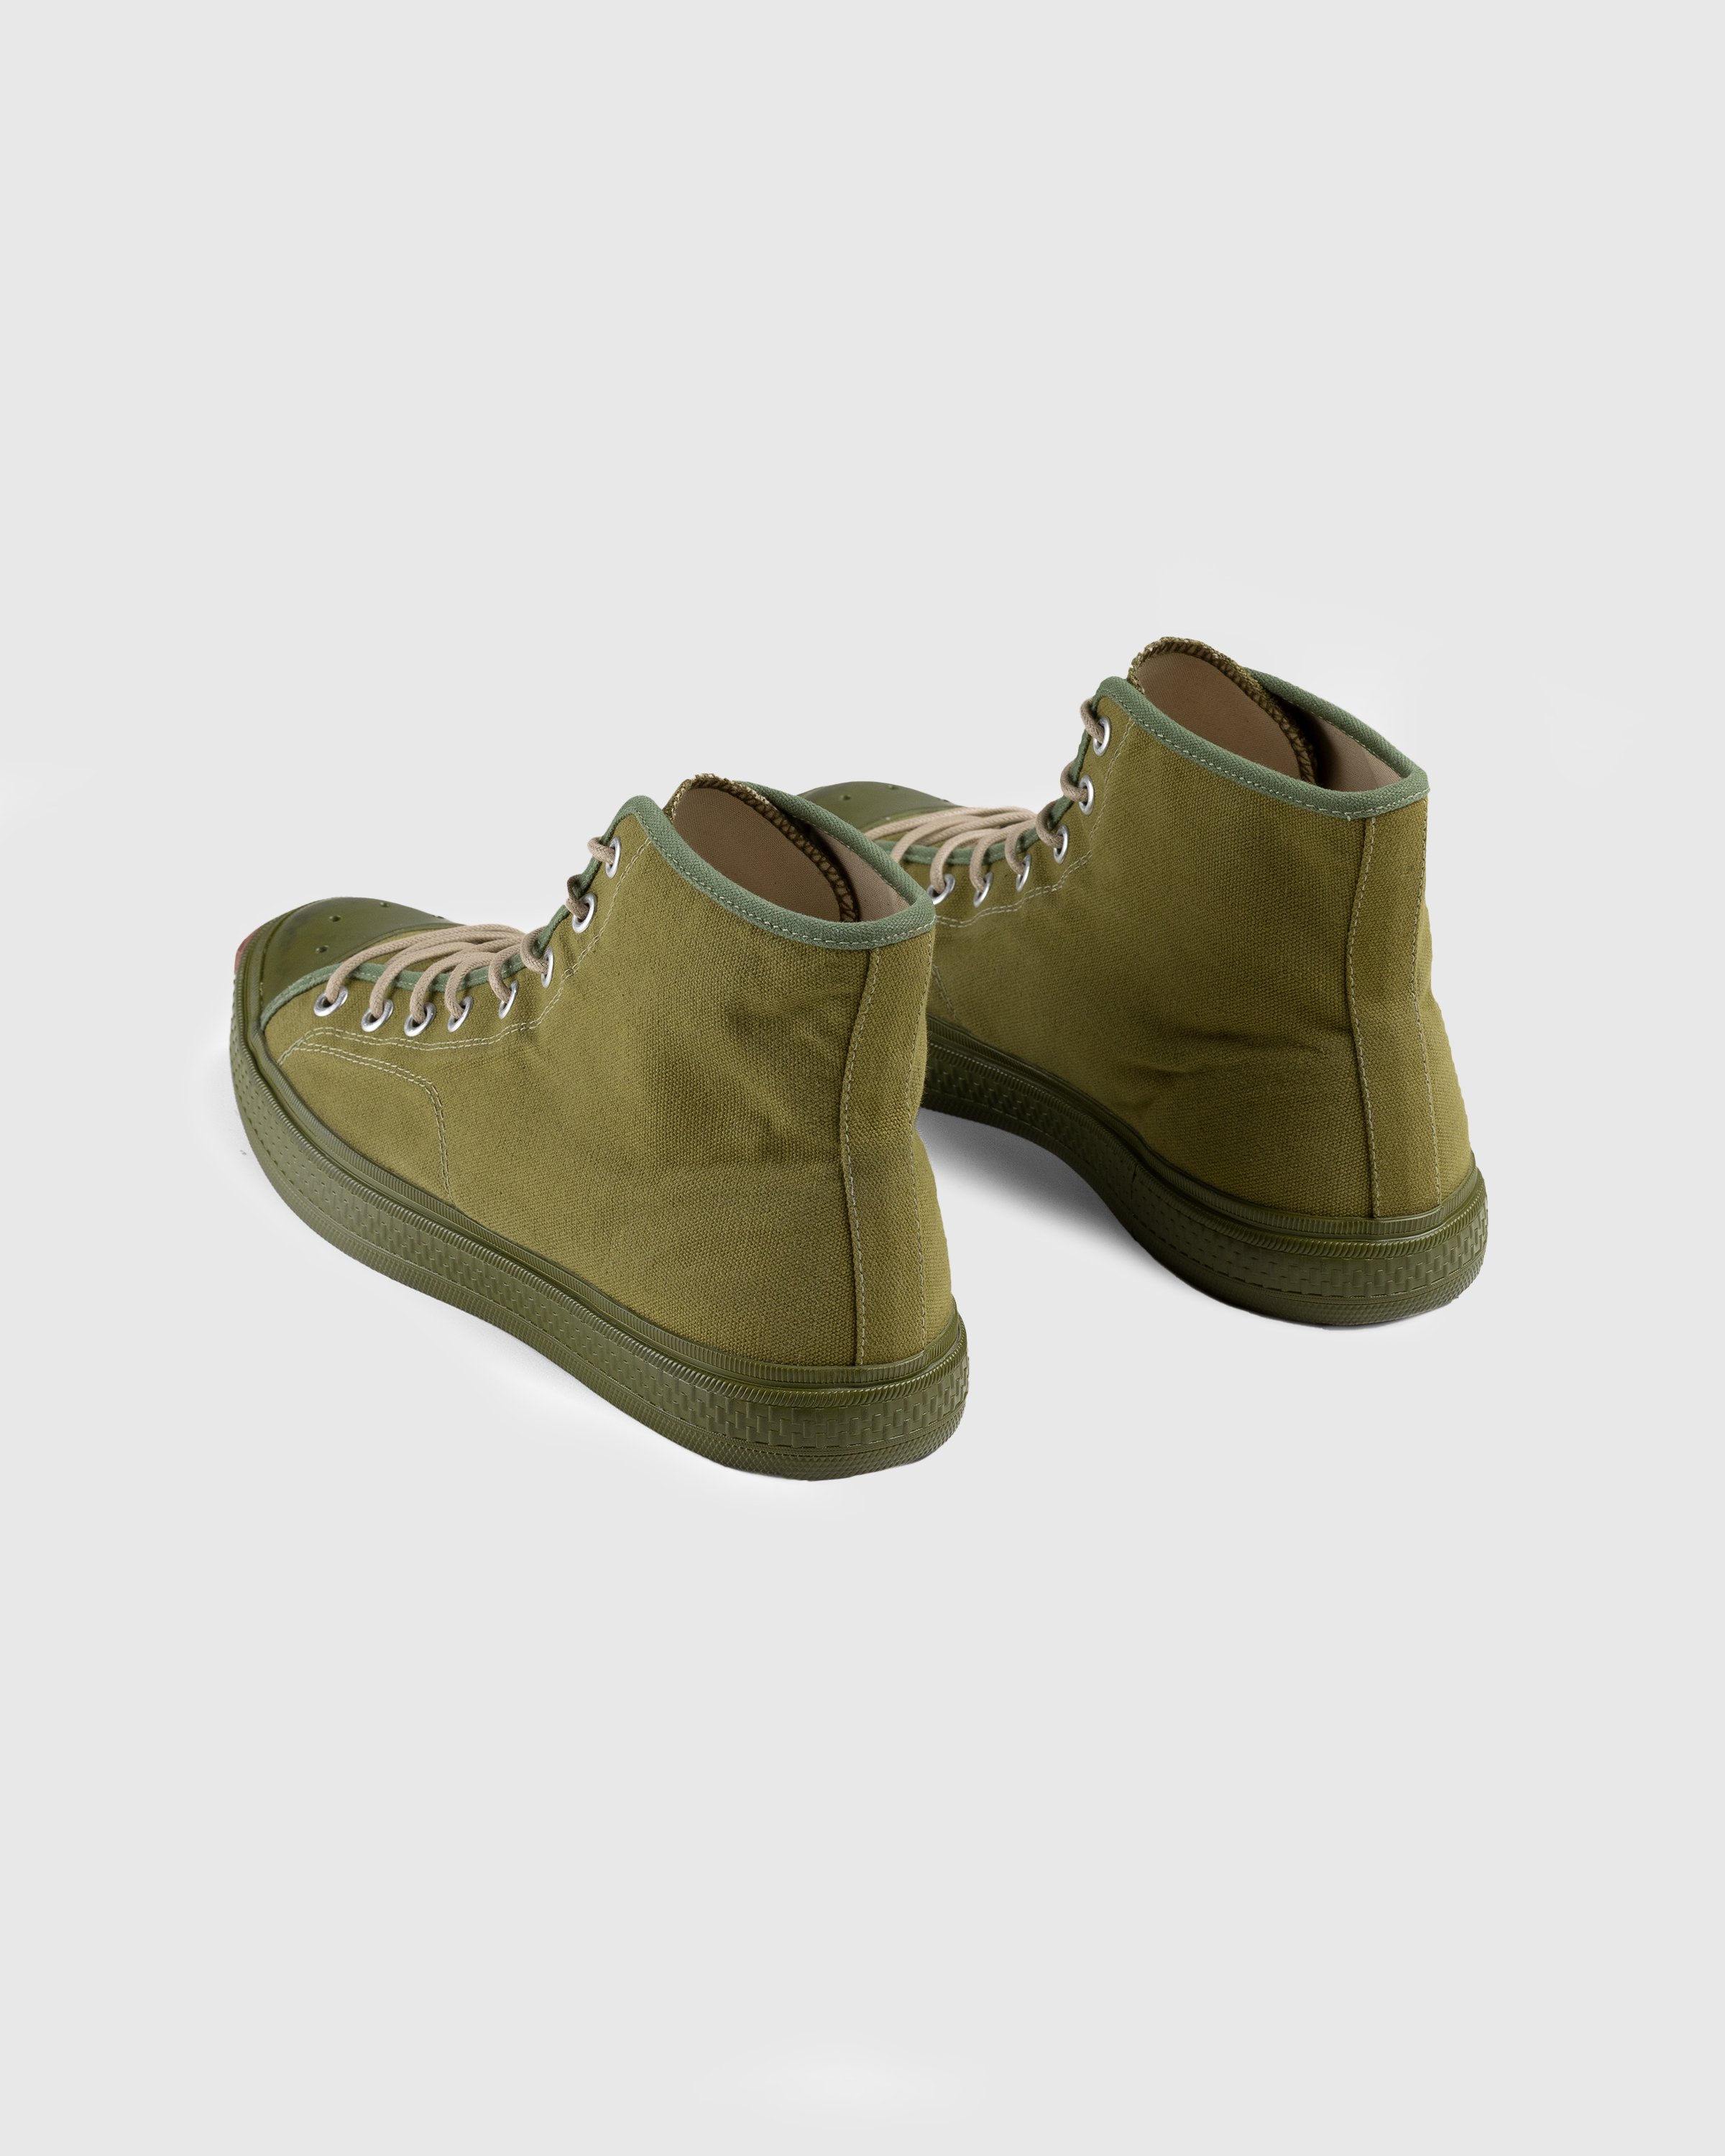 Acne Studios - Ballow High-Top Sneakers Olive Green - Footwear - Green - Image 4